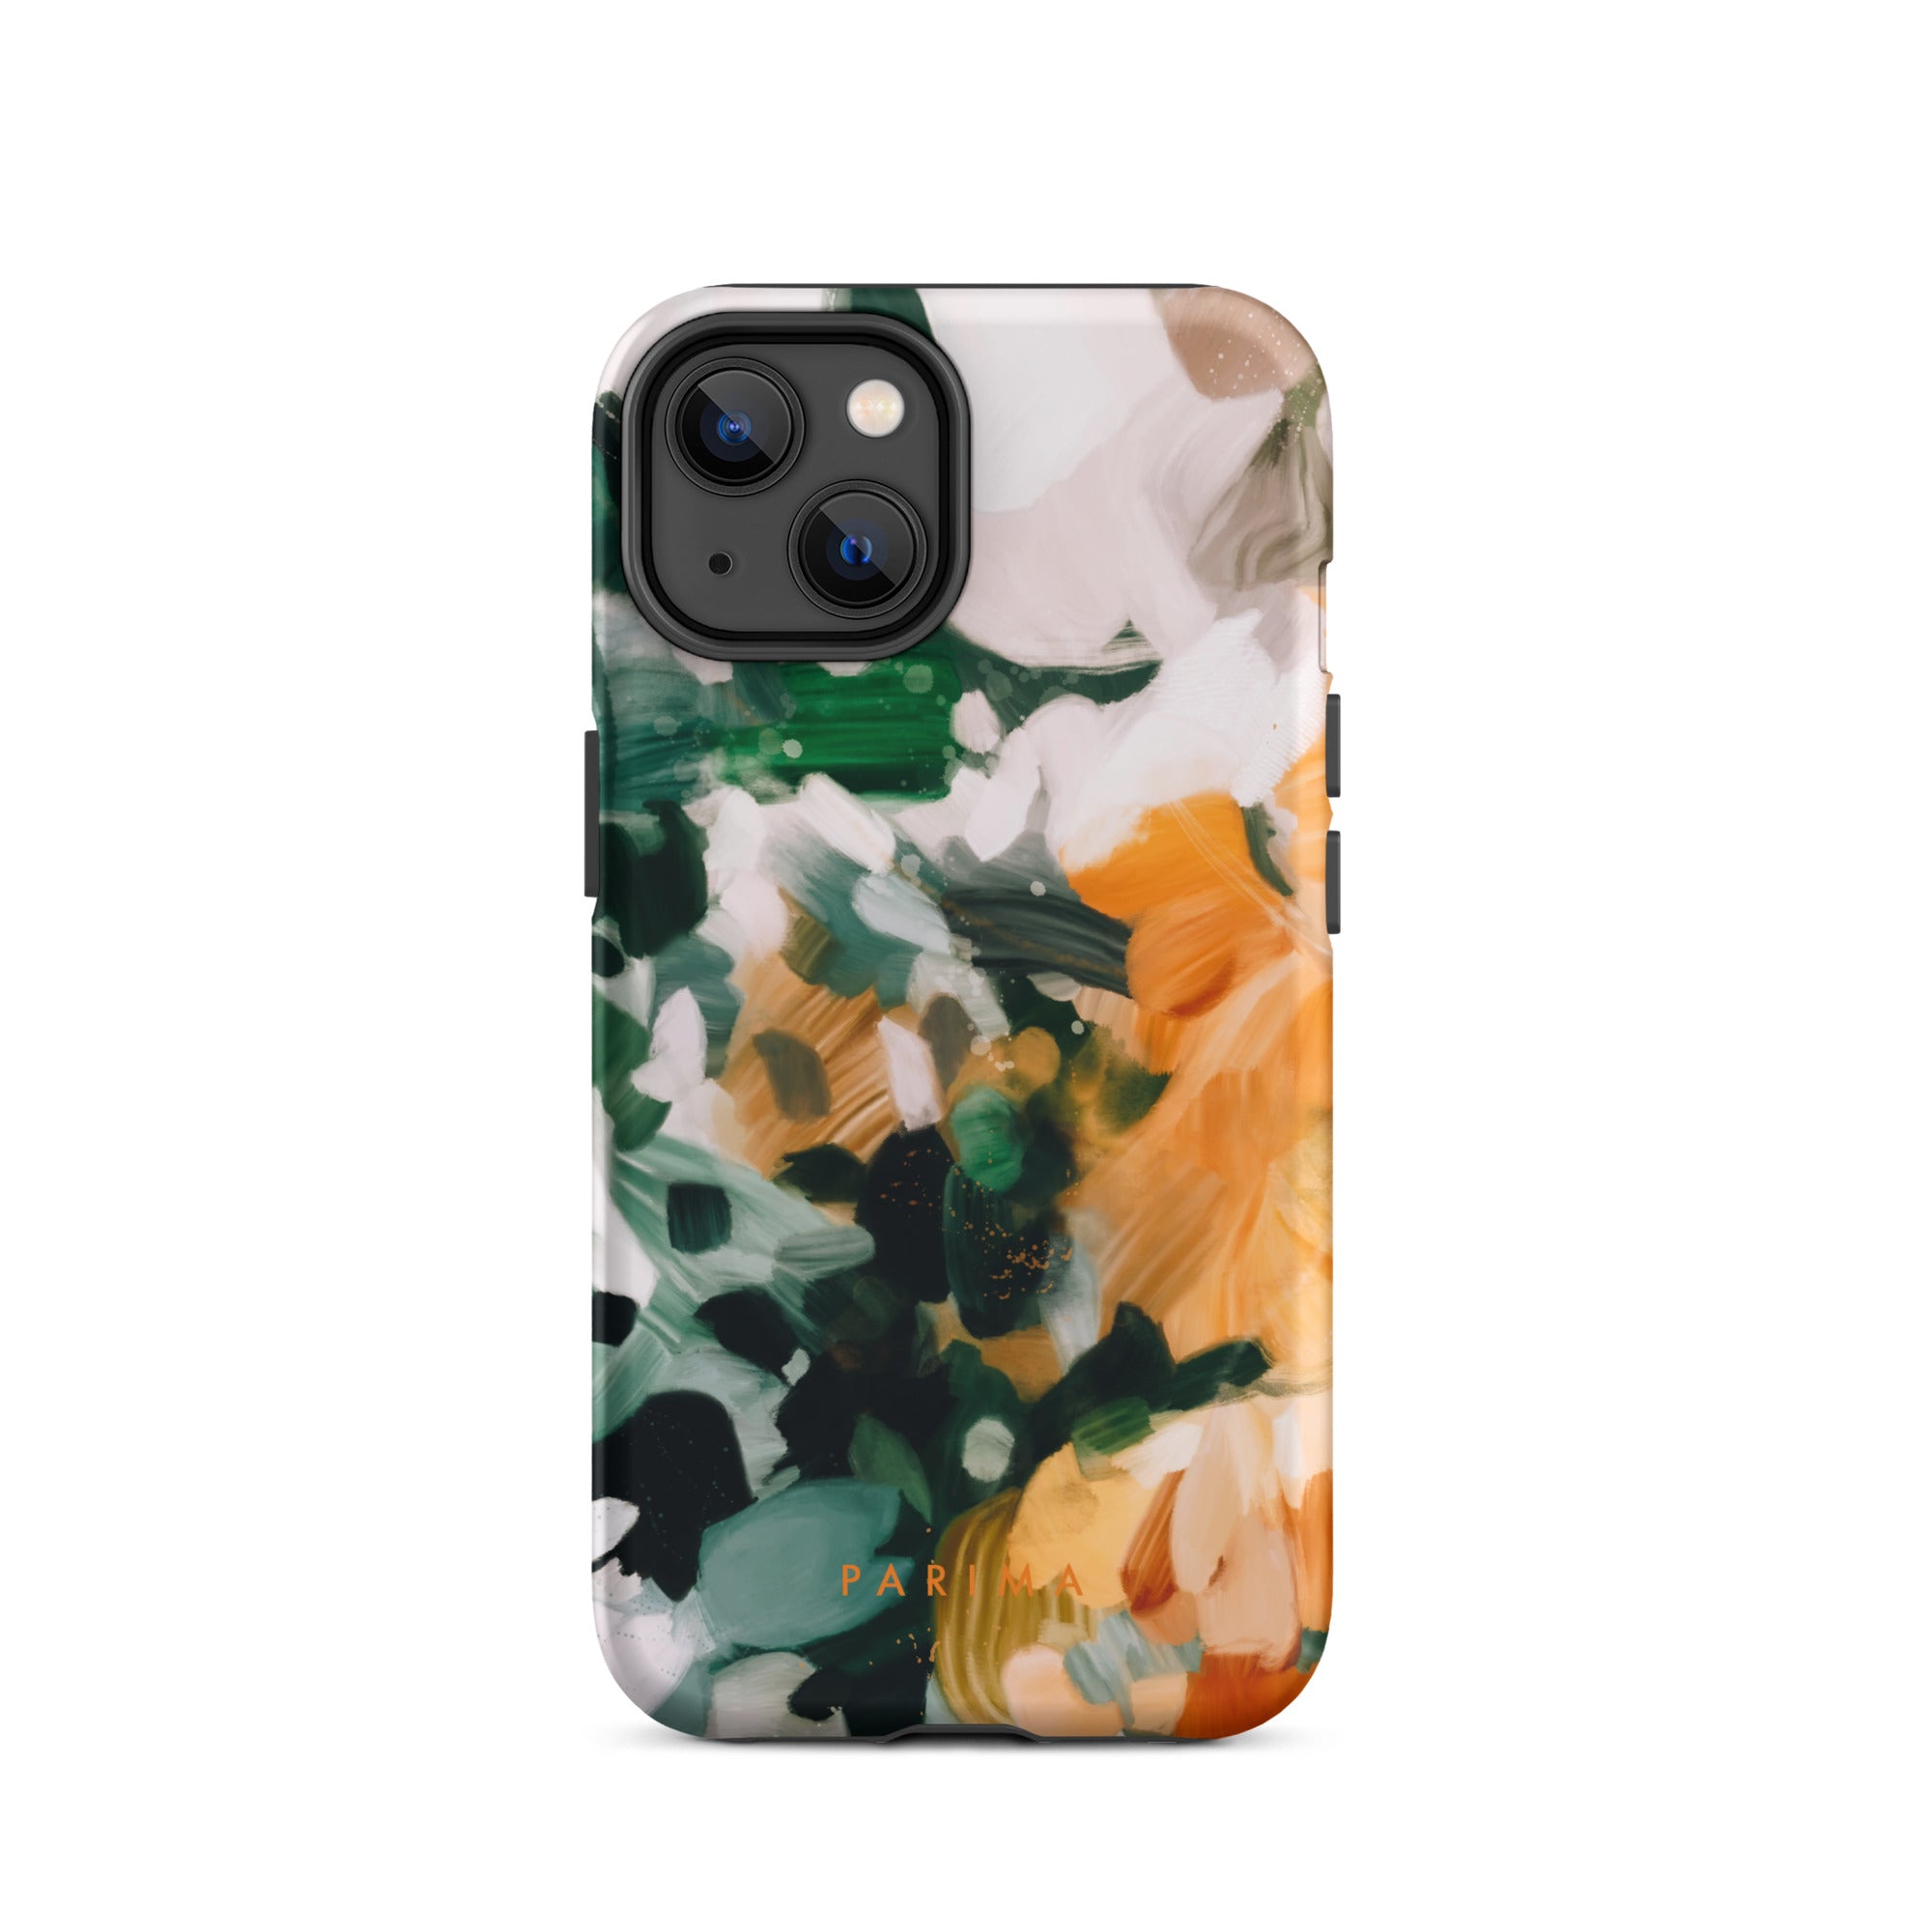 Aspen, green and orange abstract art - iPhone 14 tough case by Parima Studio